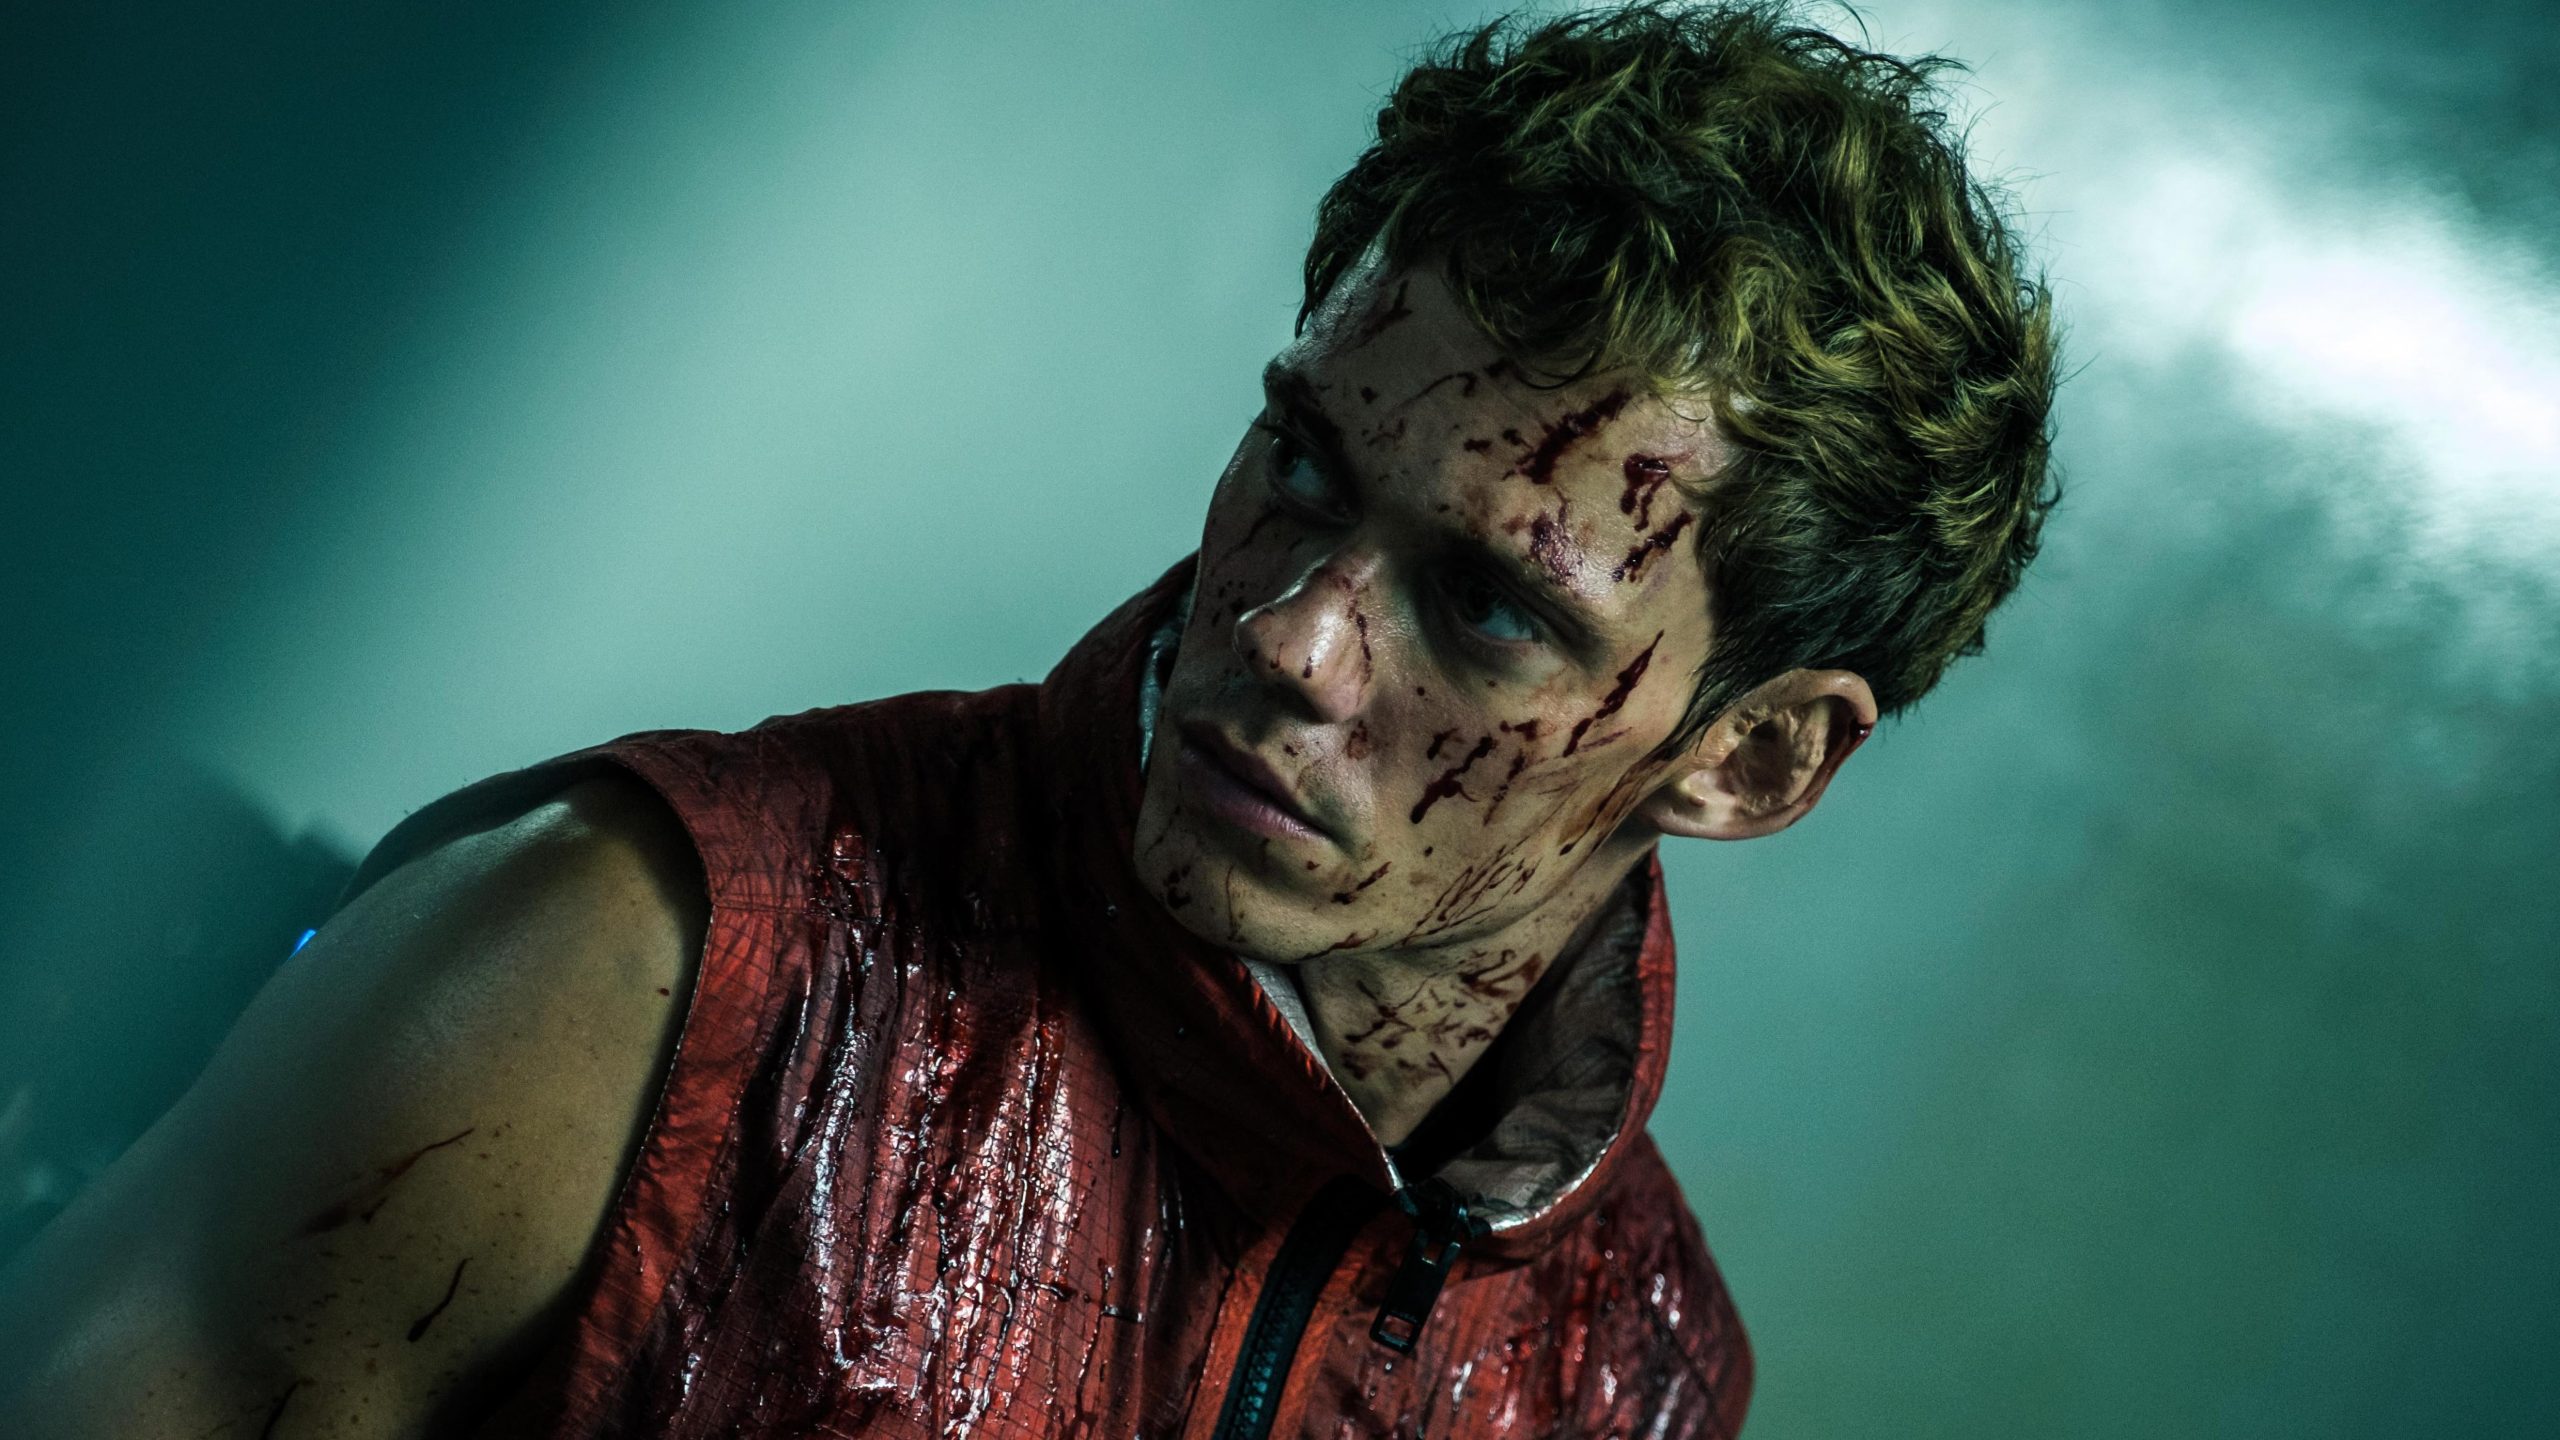 Boy Kills World Trailer Features a Ripped Bill Skarsgård Seeking Bloody Revenge